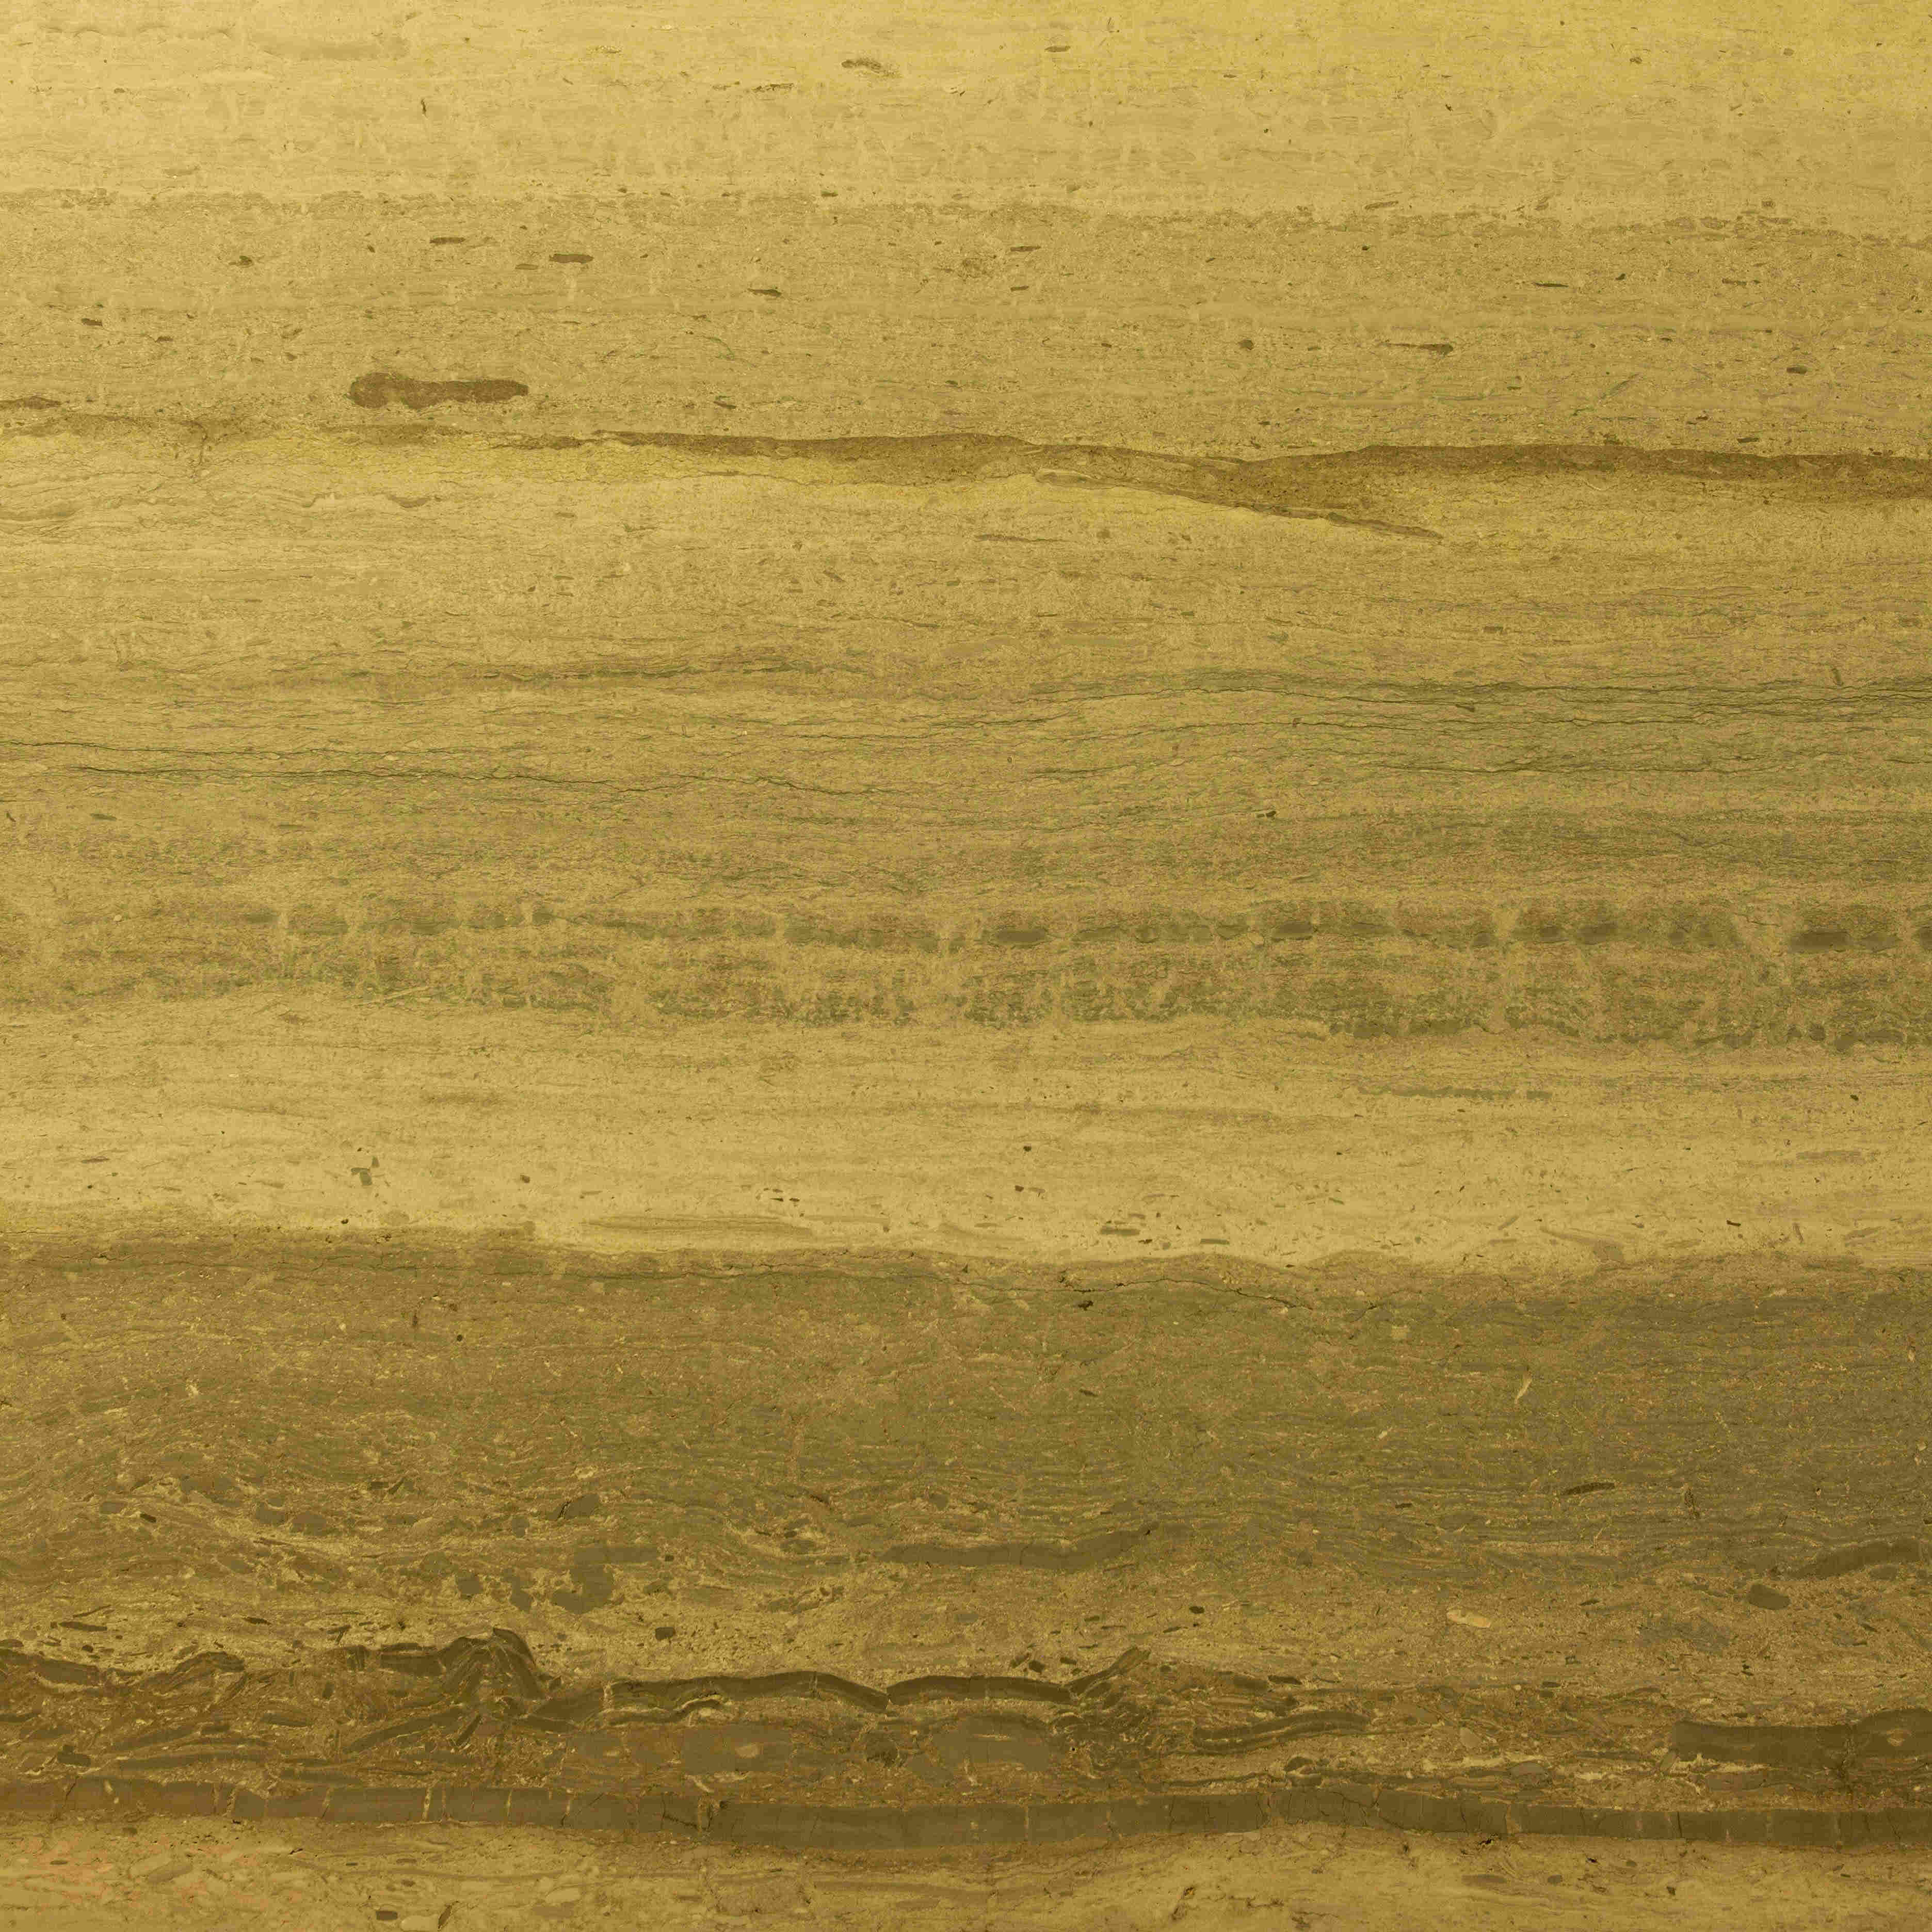 #39: Wood Grain Silver: Muddy Laminated Limestone, Calcareous Lake/Inland Sea Sediments, Terrestrial Sedimentary; China